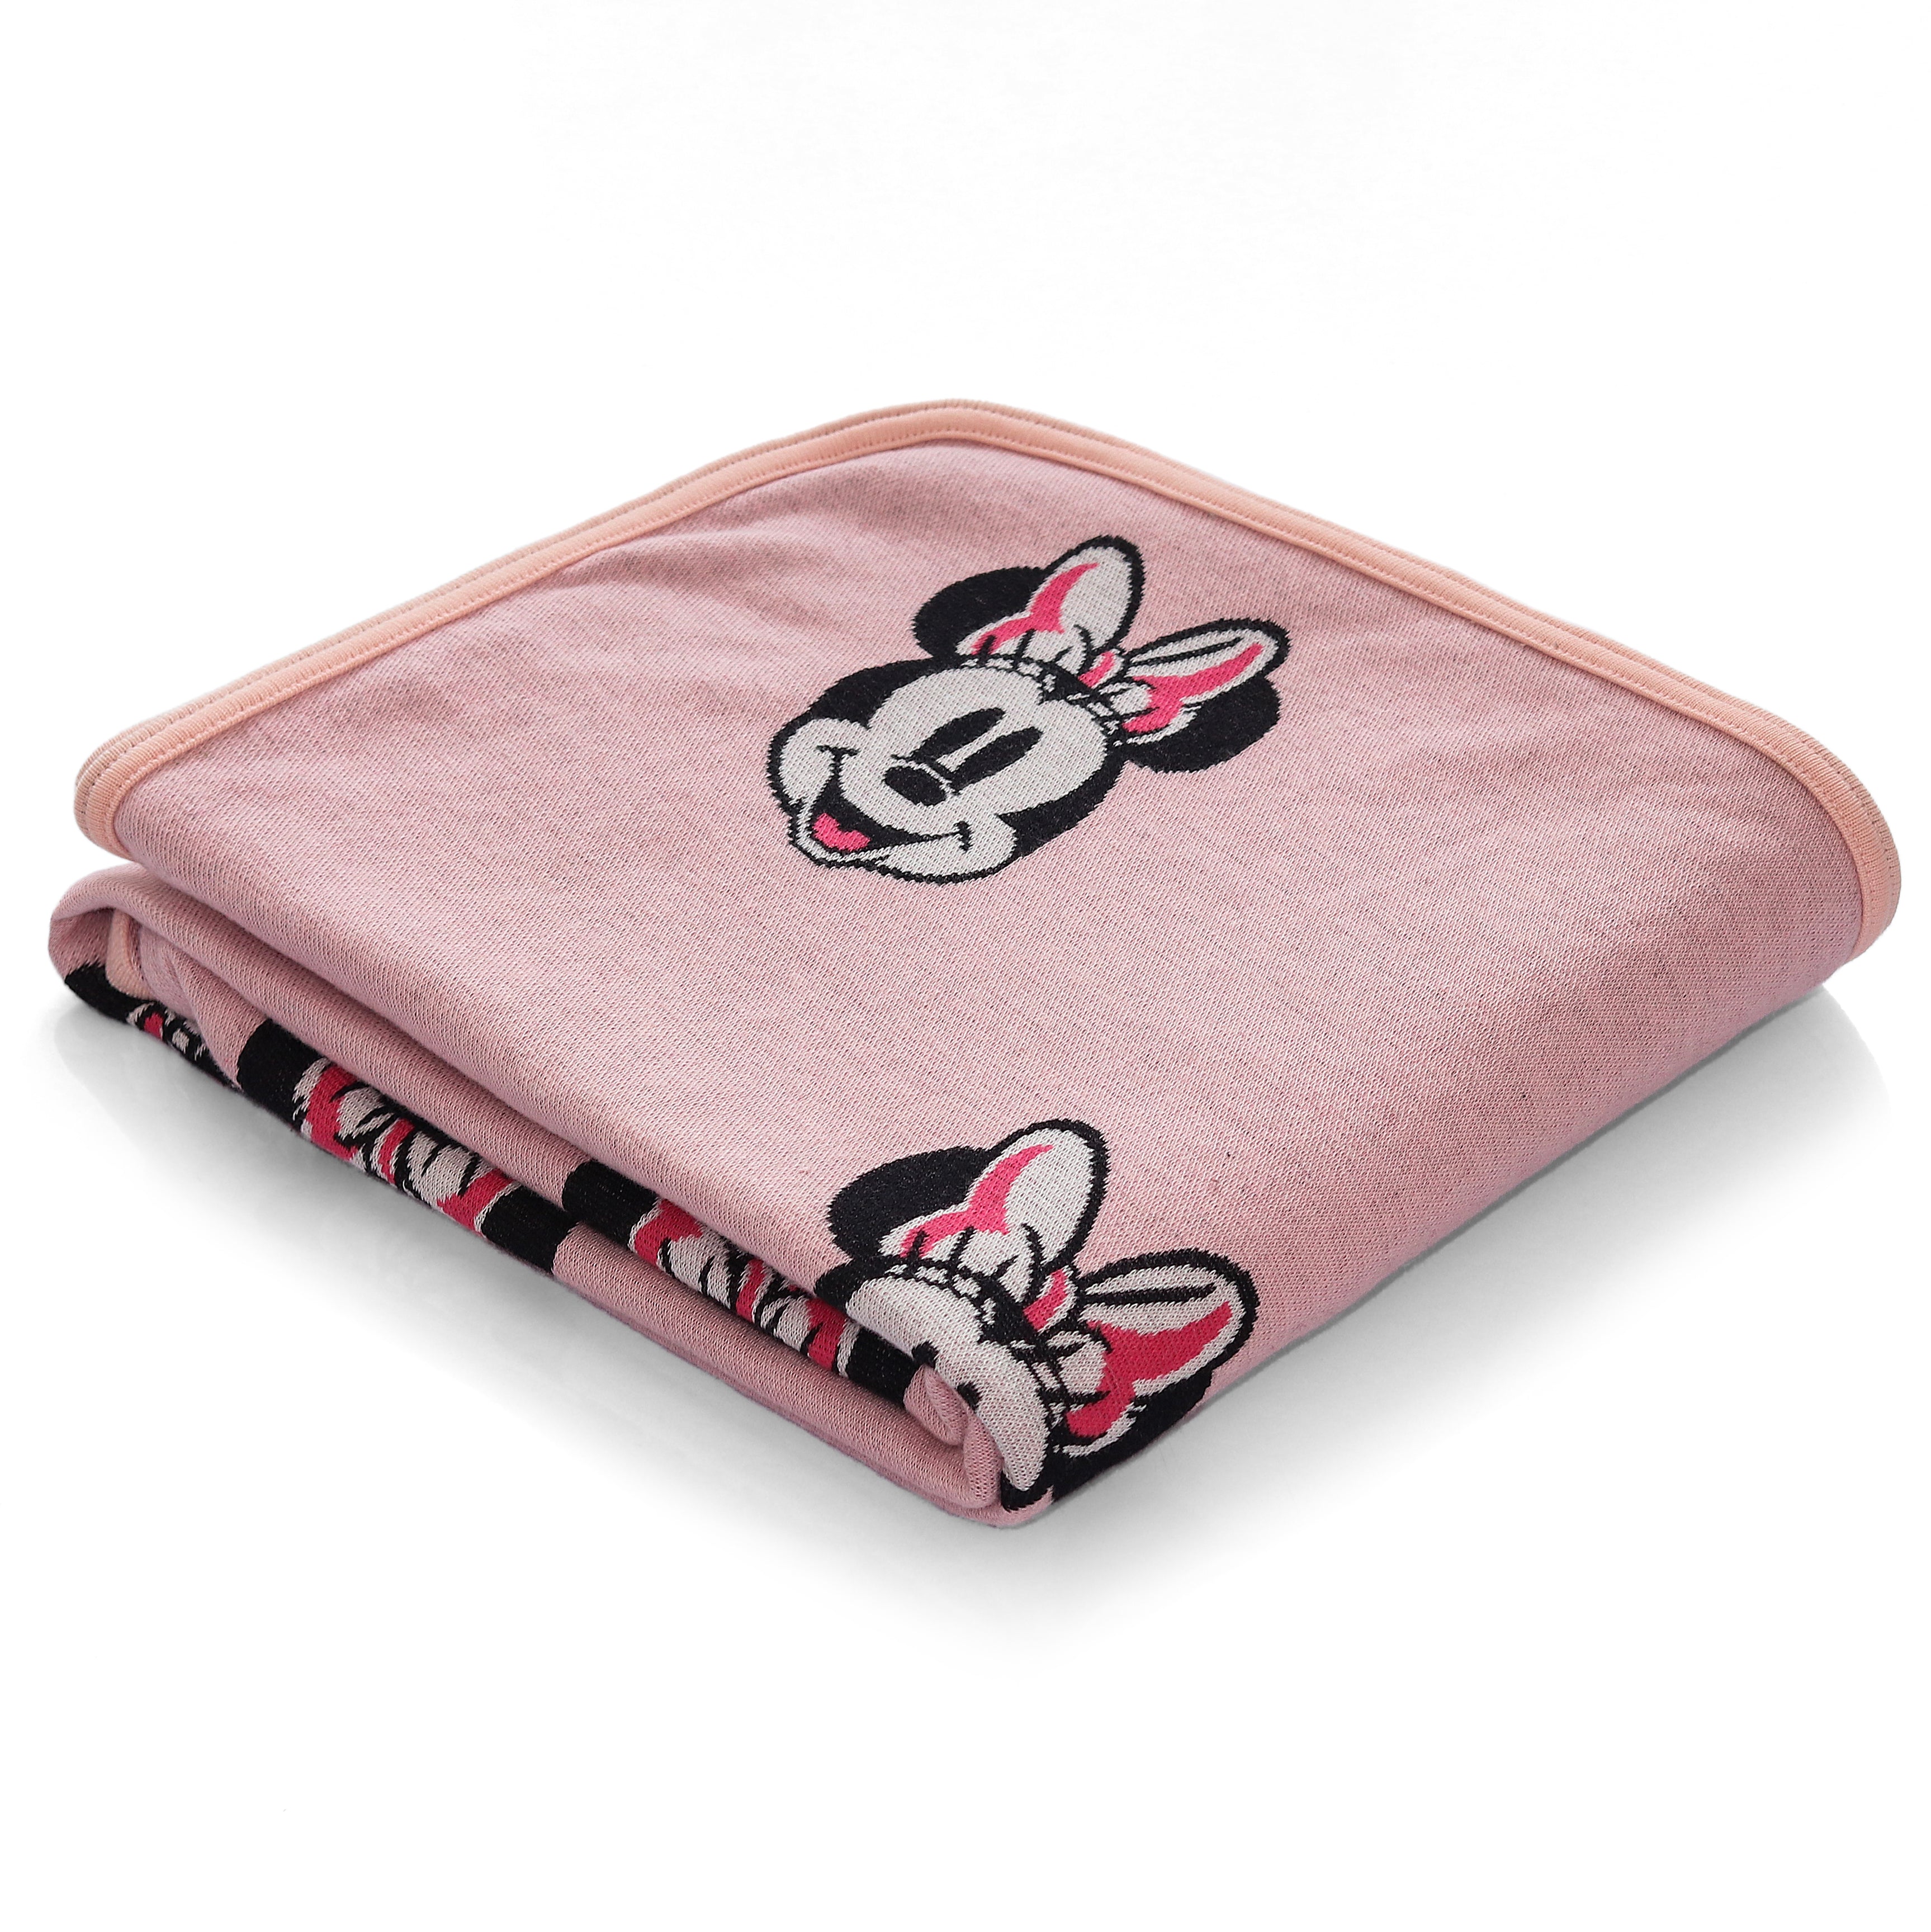 The White Cradle Disney Minnie Mouse Kids/Infant Blanket - Super Soft Plush Baby Blanket - 100x80 cmThe White Cradle Disney Minnie Mouse Kids/infant Blanket - Super Soft Plush Baby Blanket - 100x80 cm